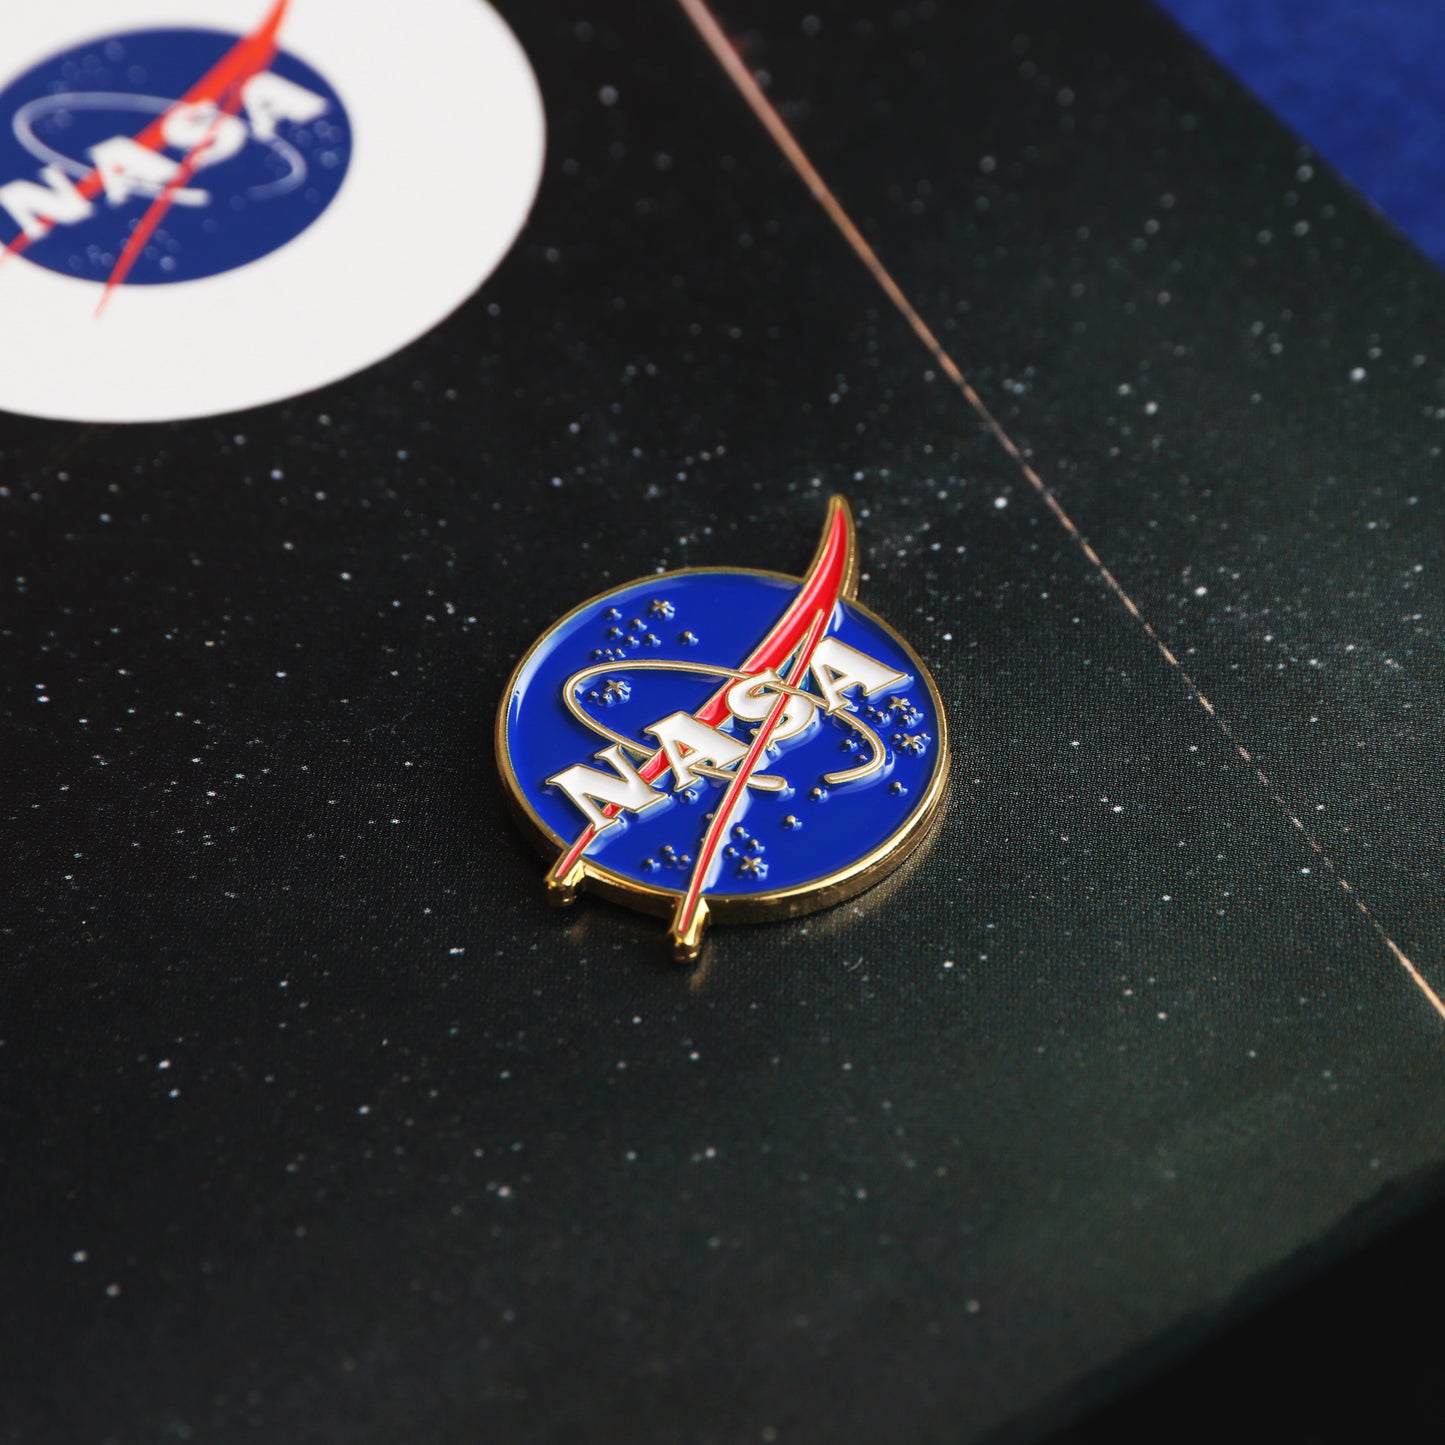 NASA Meatball Pin Badge